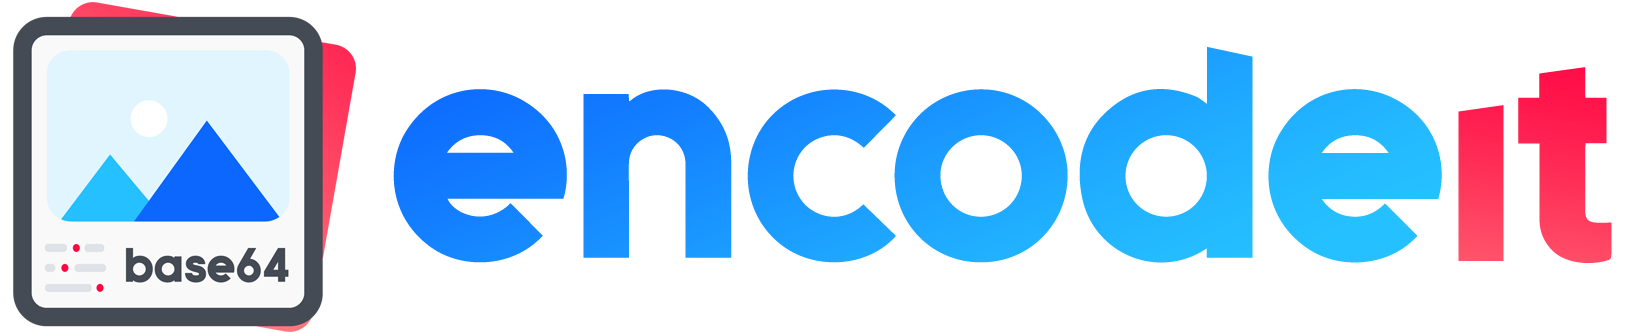 encodeit-logo